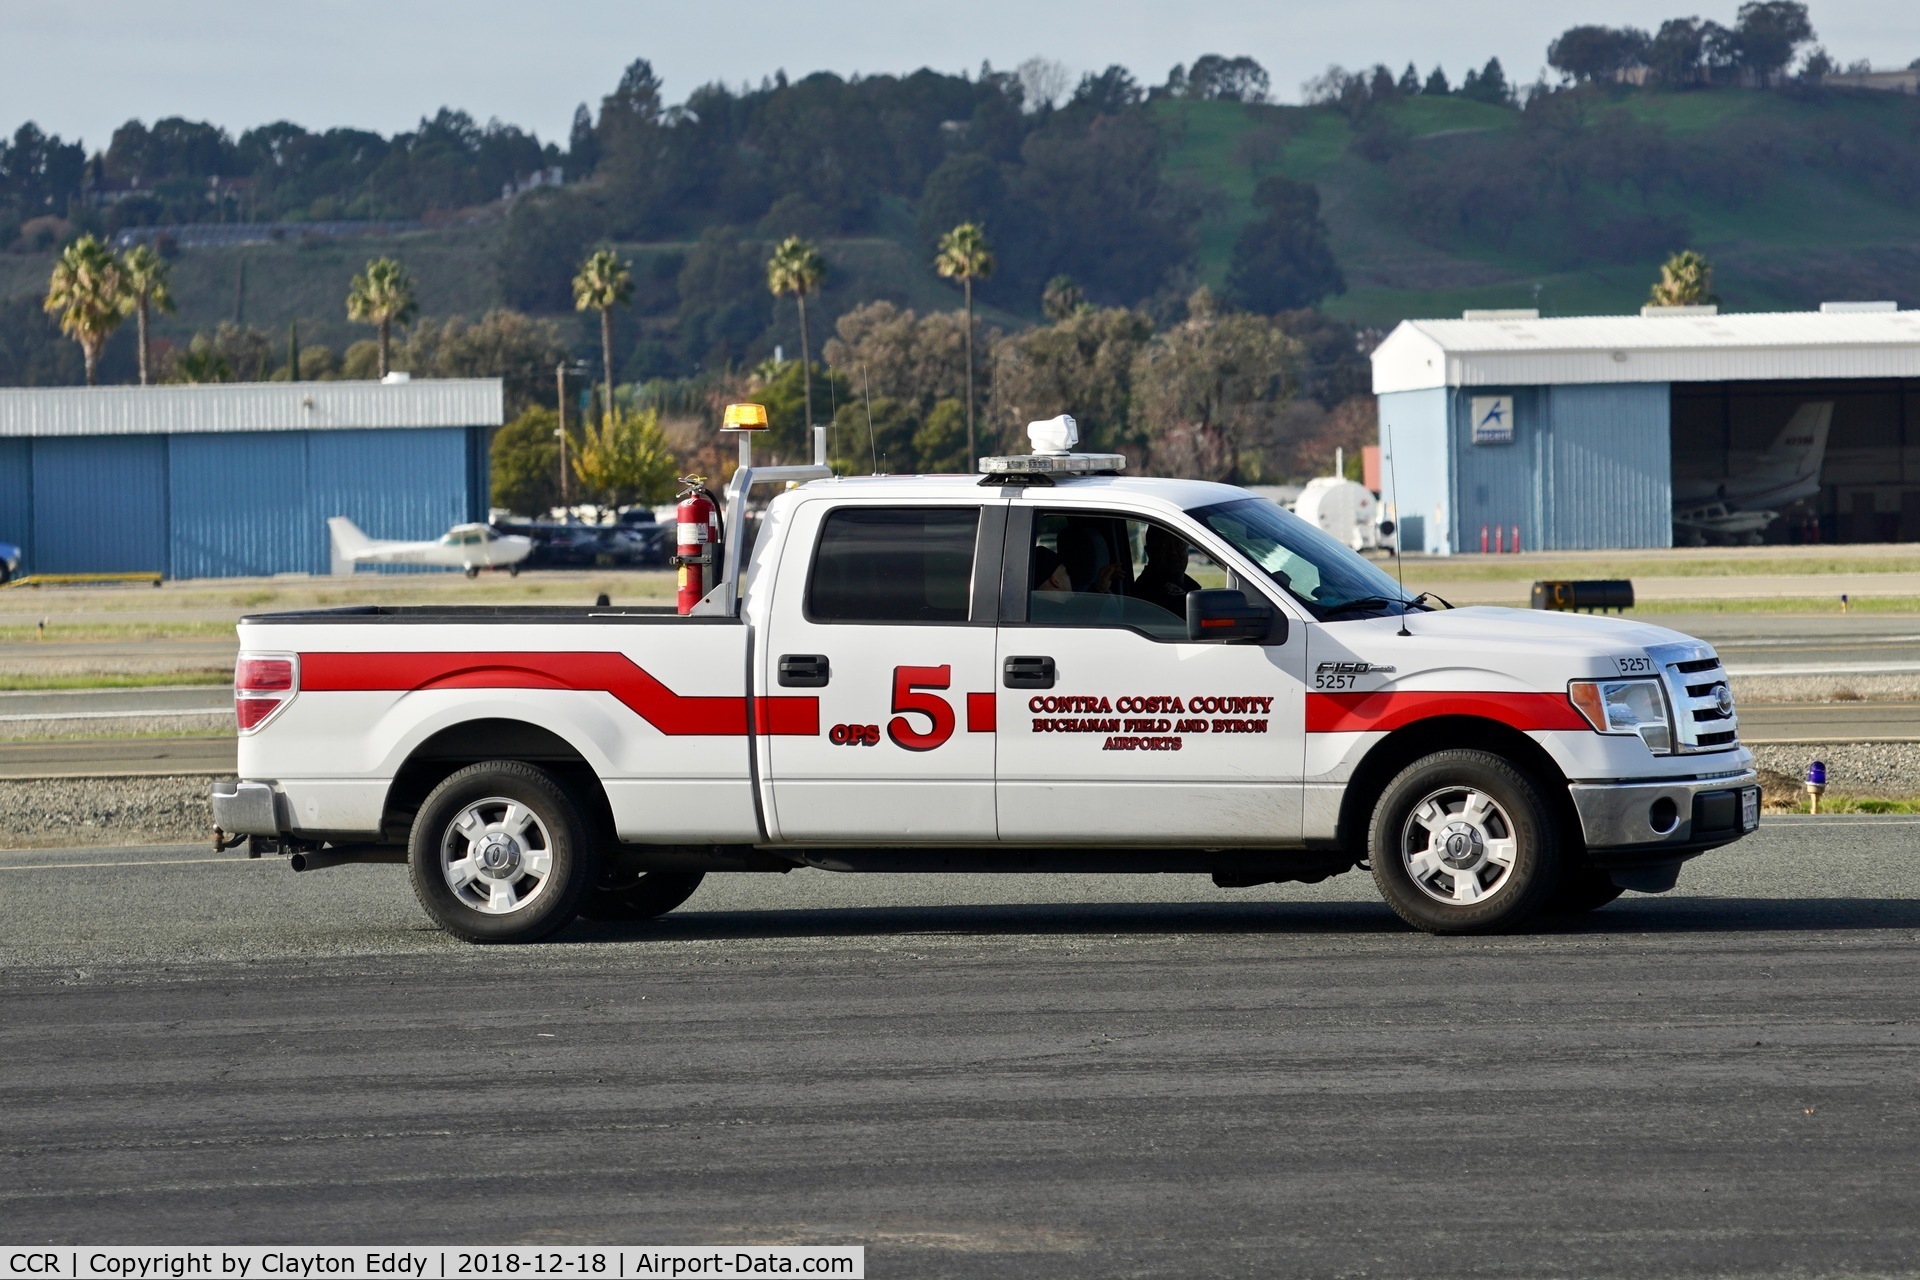 Buchanan Field Airport (CCR) - Rescue truck Buchanan Field 2018.